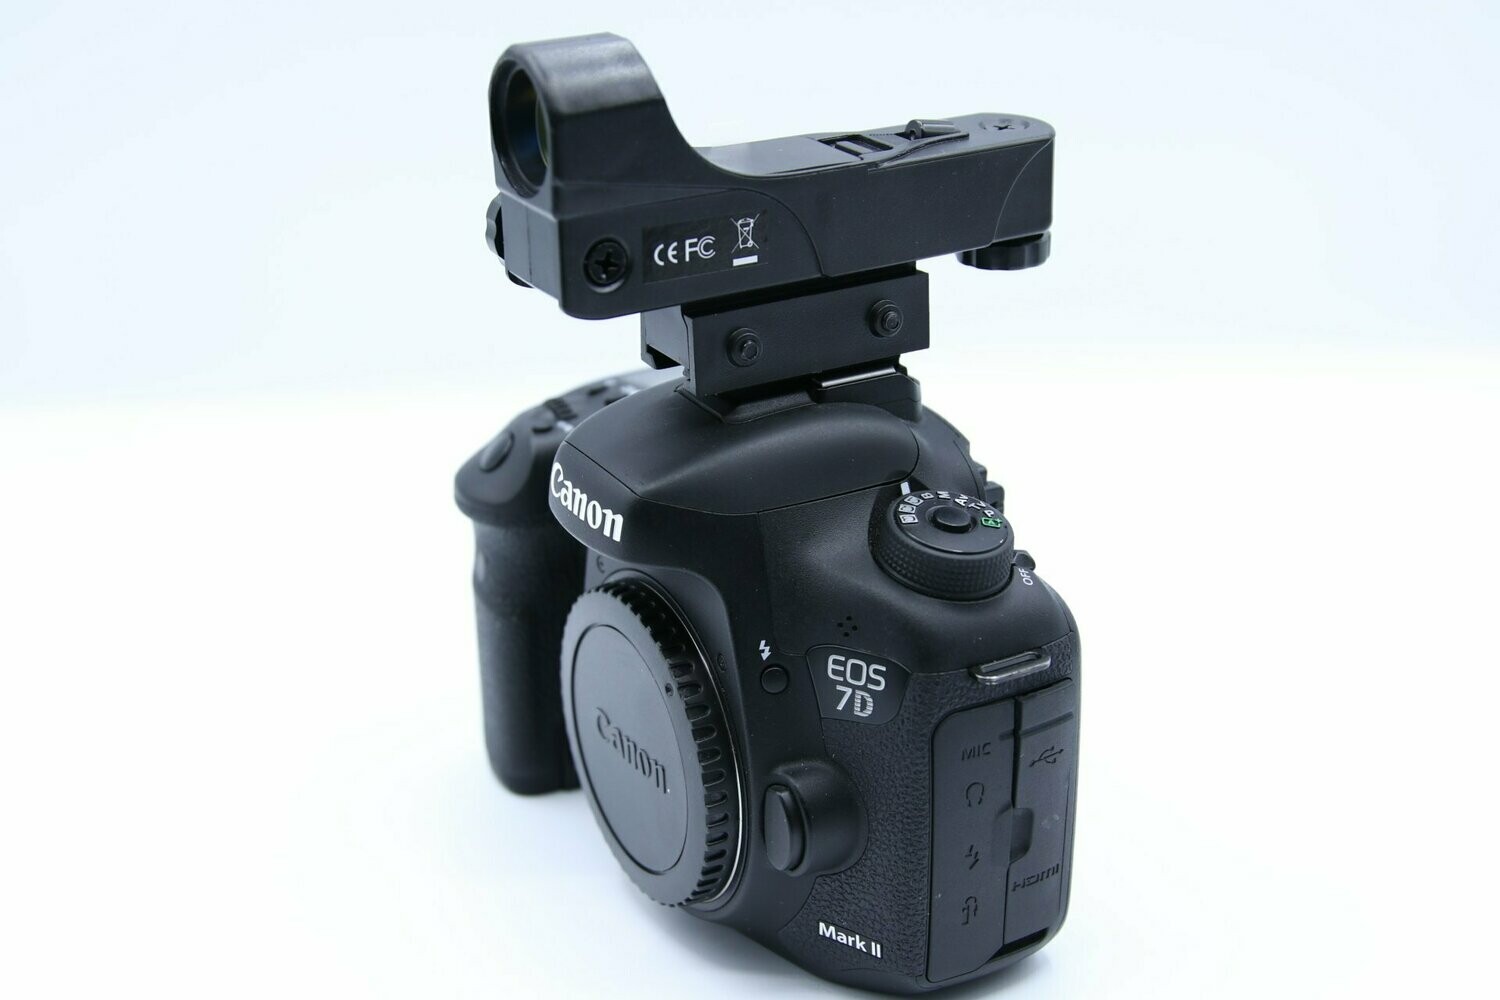 Blitzschuhadapter für Leuchtpunktsucher an DSLR Kameras 11mm Version